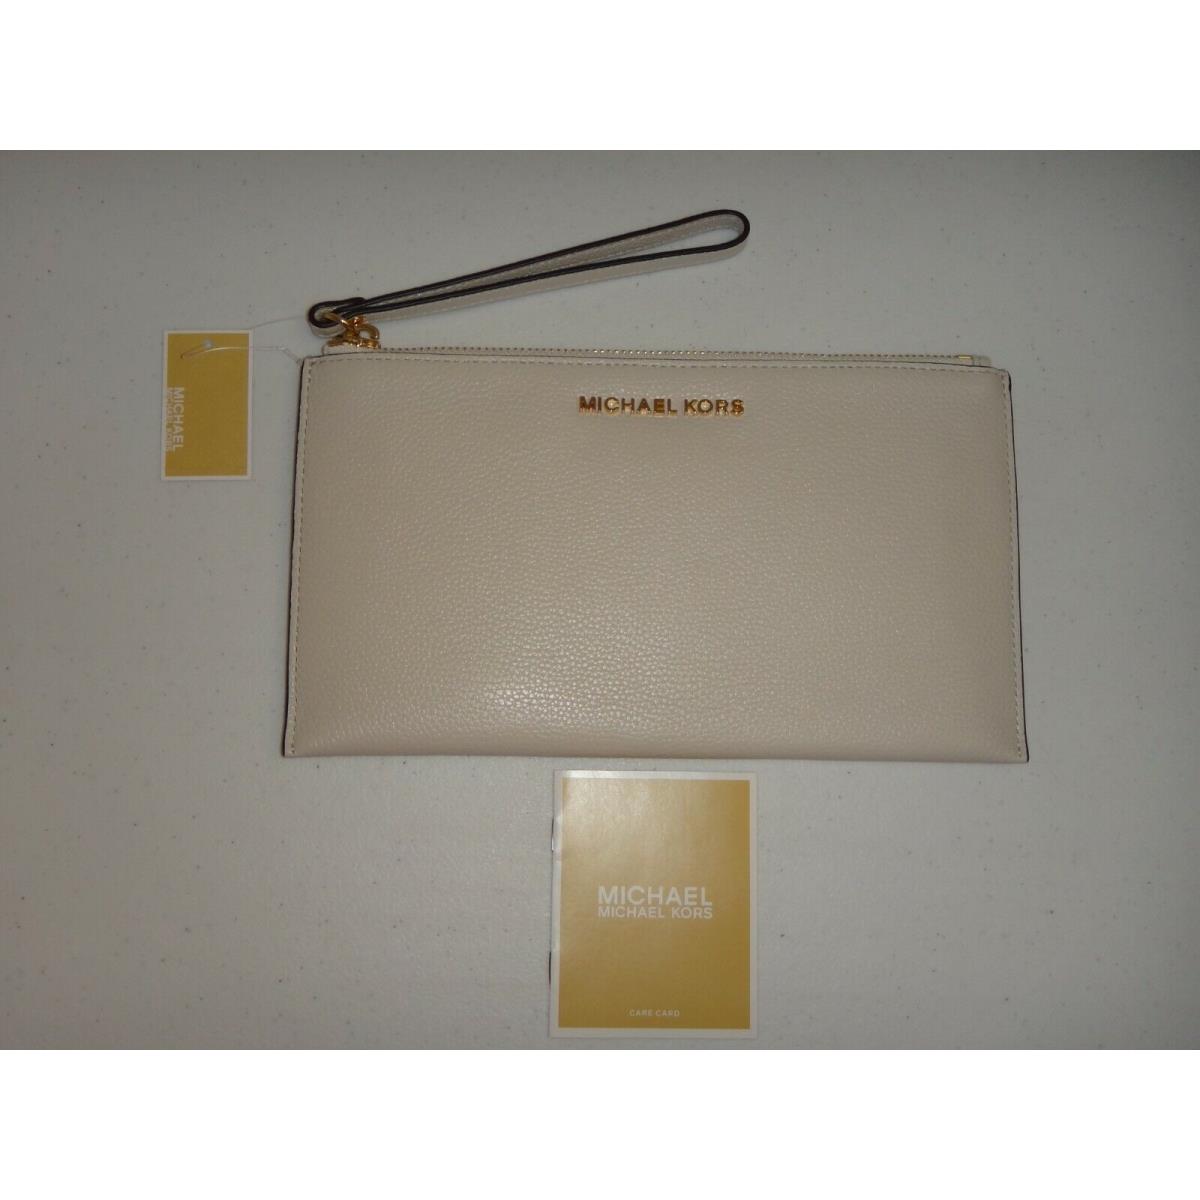 Michael Kors MK Jet Set LG Zip Clutch Wristlet Wallet White Vanilla Leather Gold